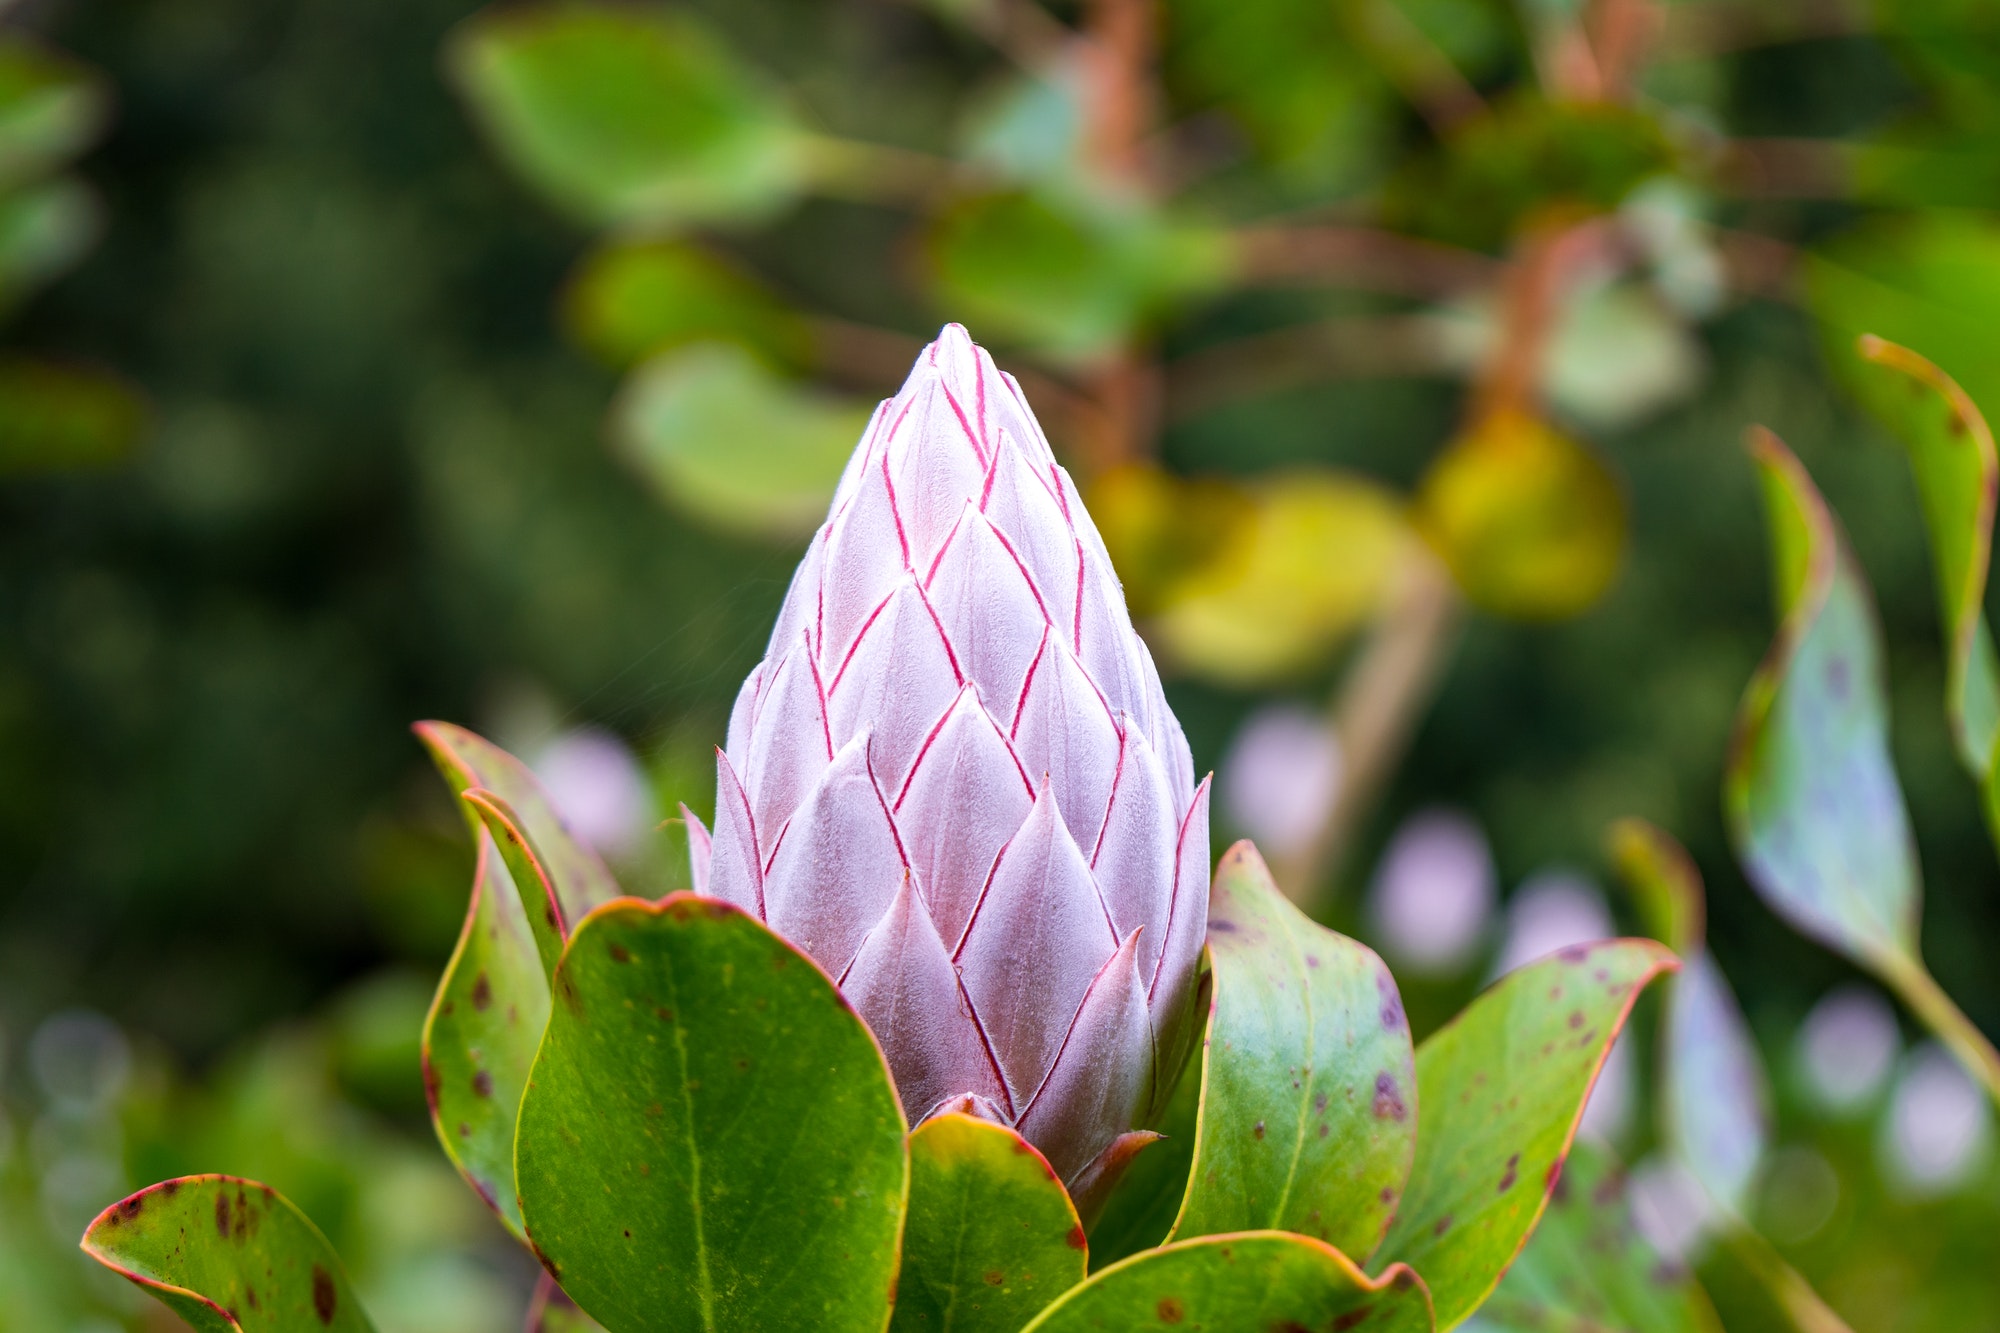 Closeup shot of a closed king protea flower